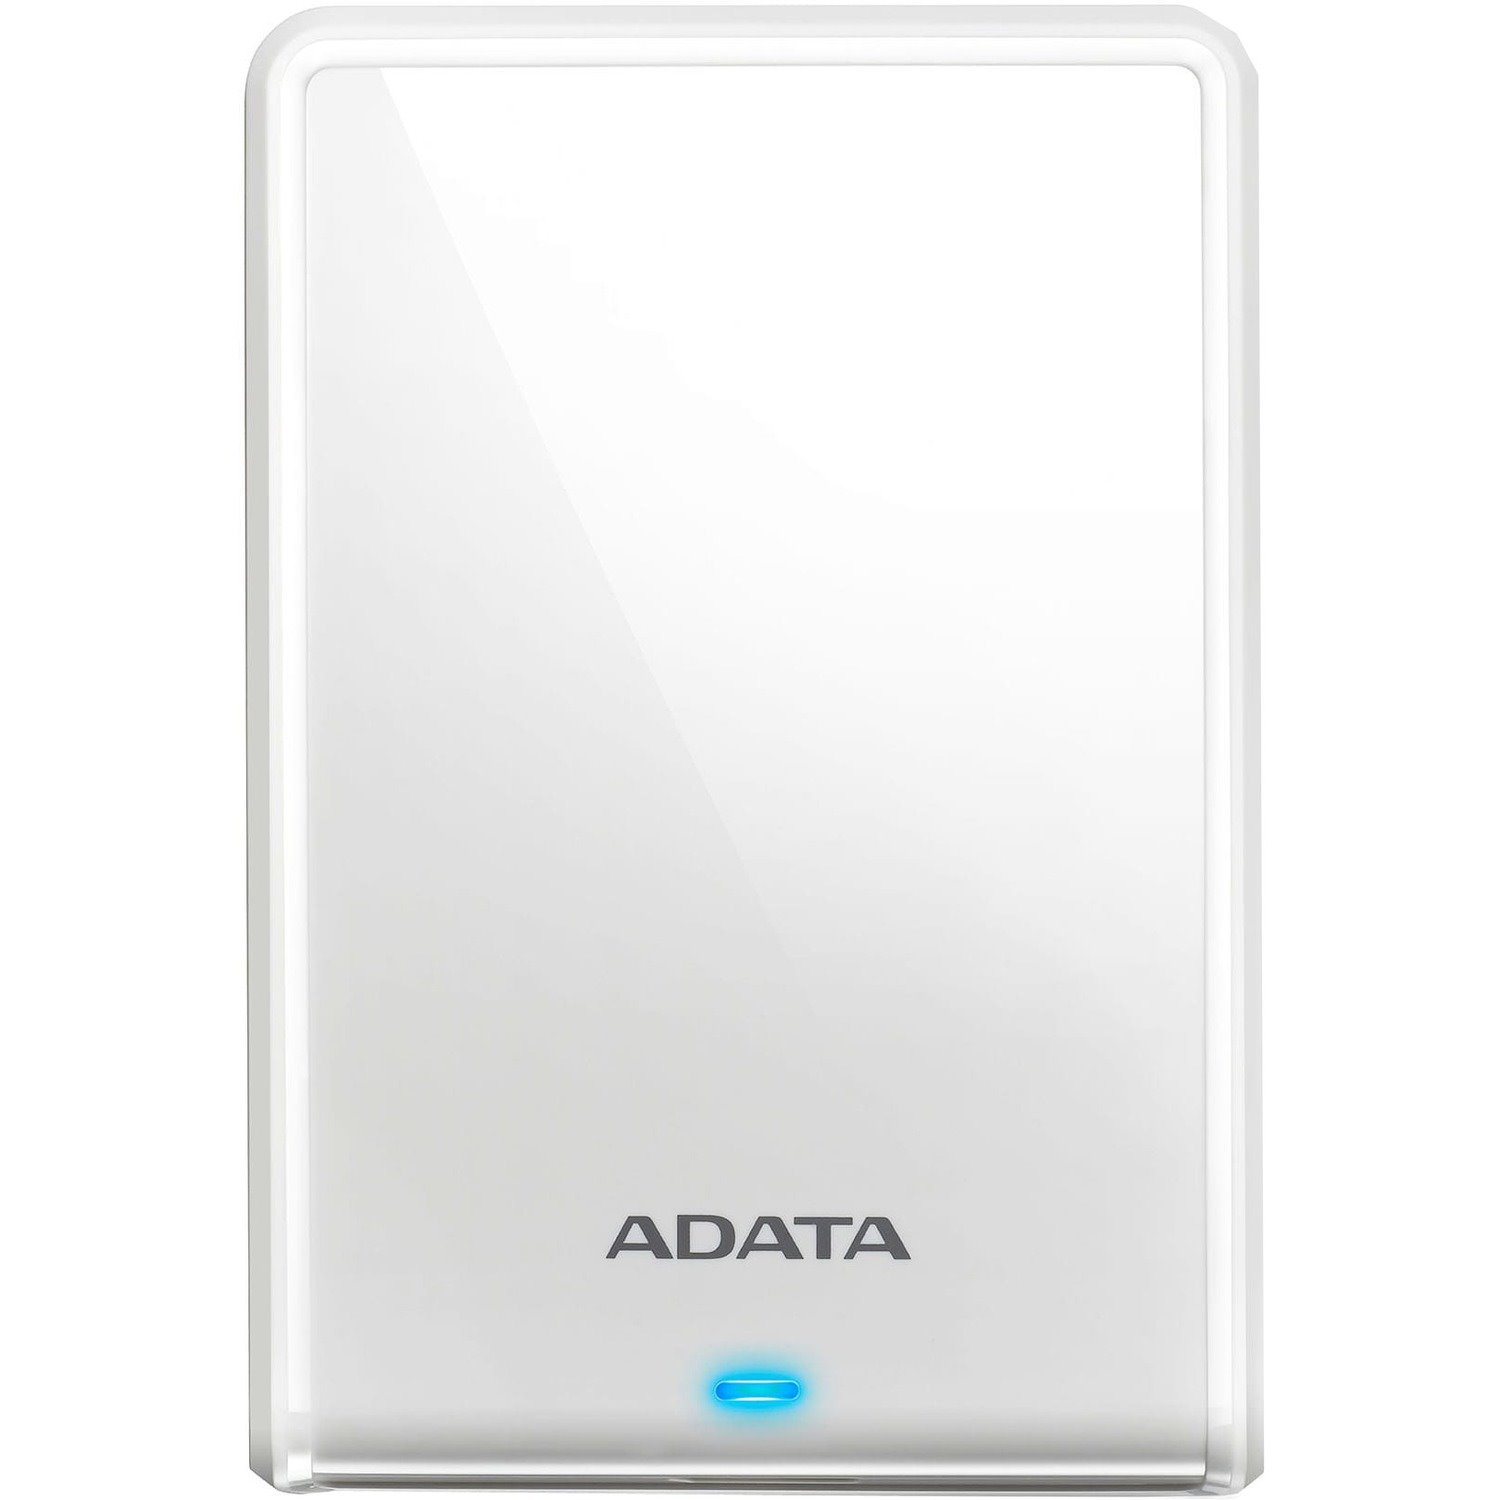 Adata HV620S 2 TB Portable Hard Drive - External - White